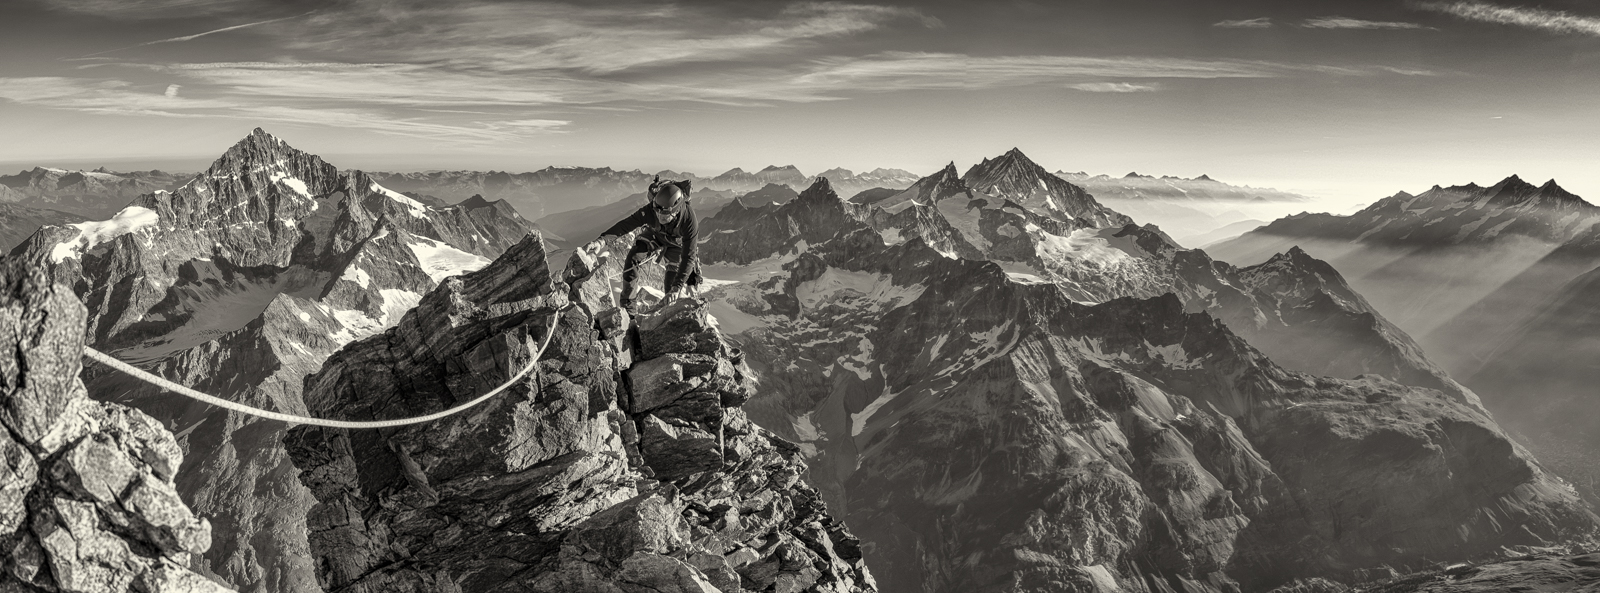 2 High on the Matterhorn - Andy Teasdale